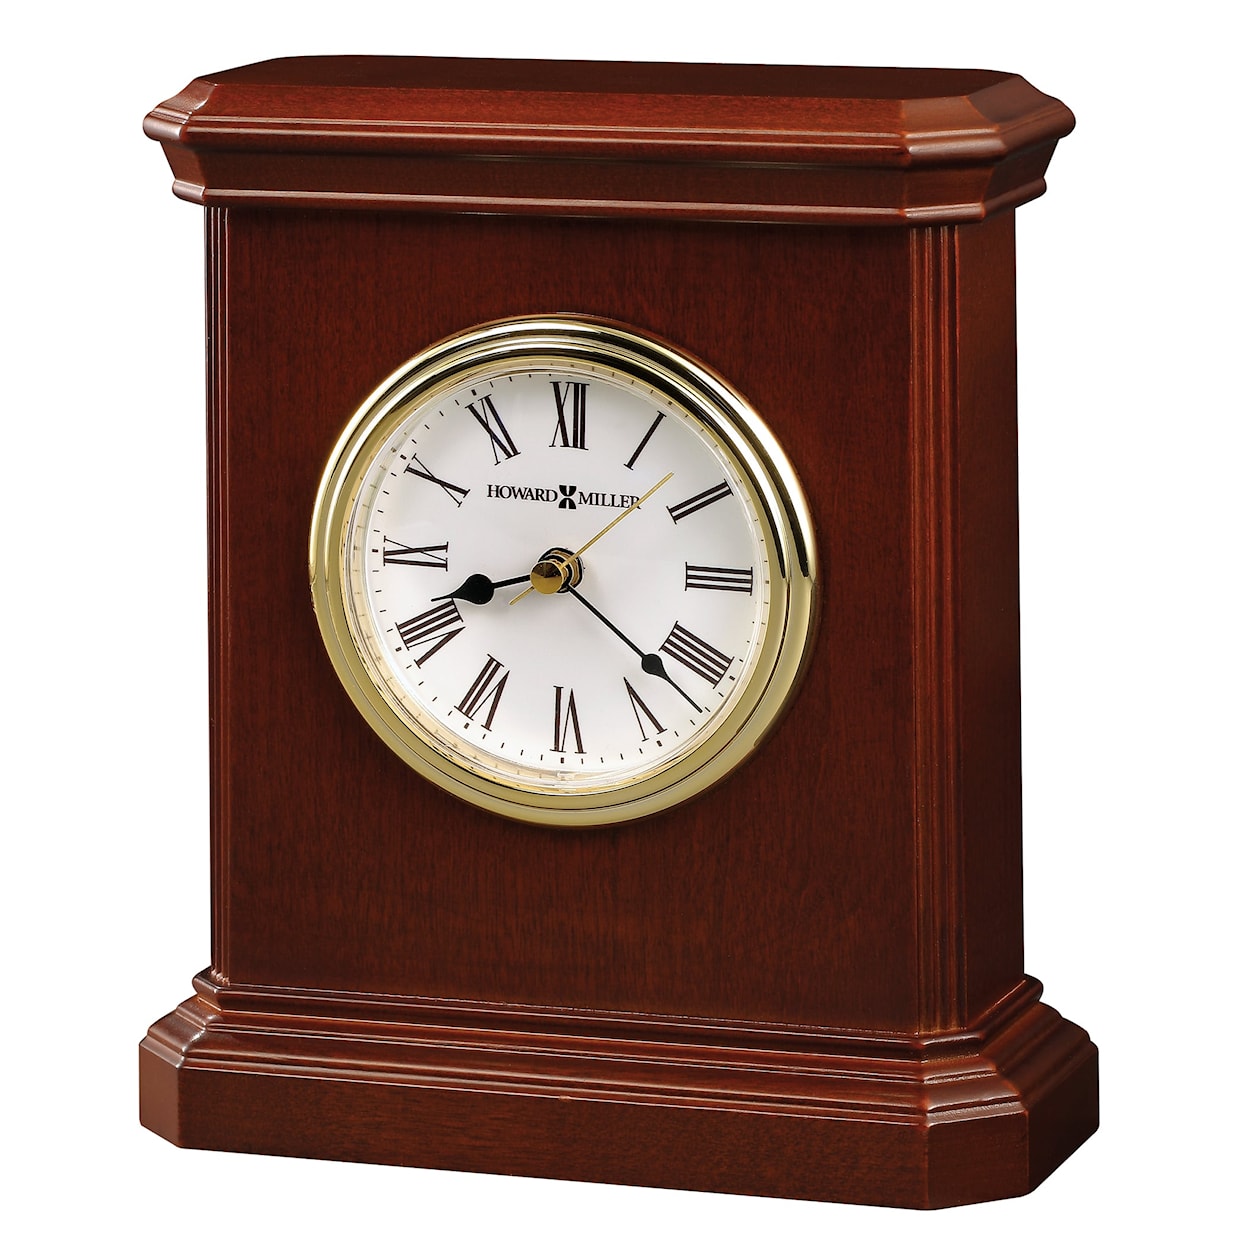 Howard Miller Howard Miller Windsor Carriage Tabletop Clock